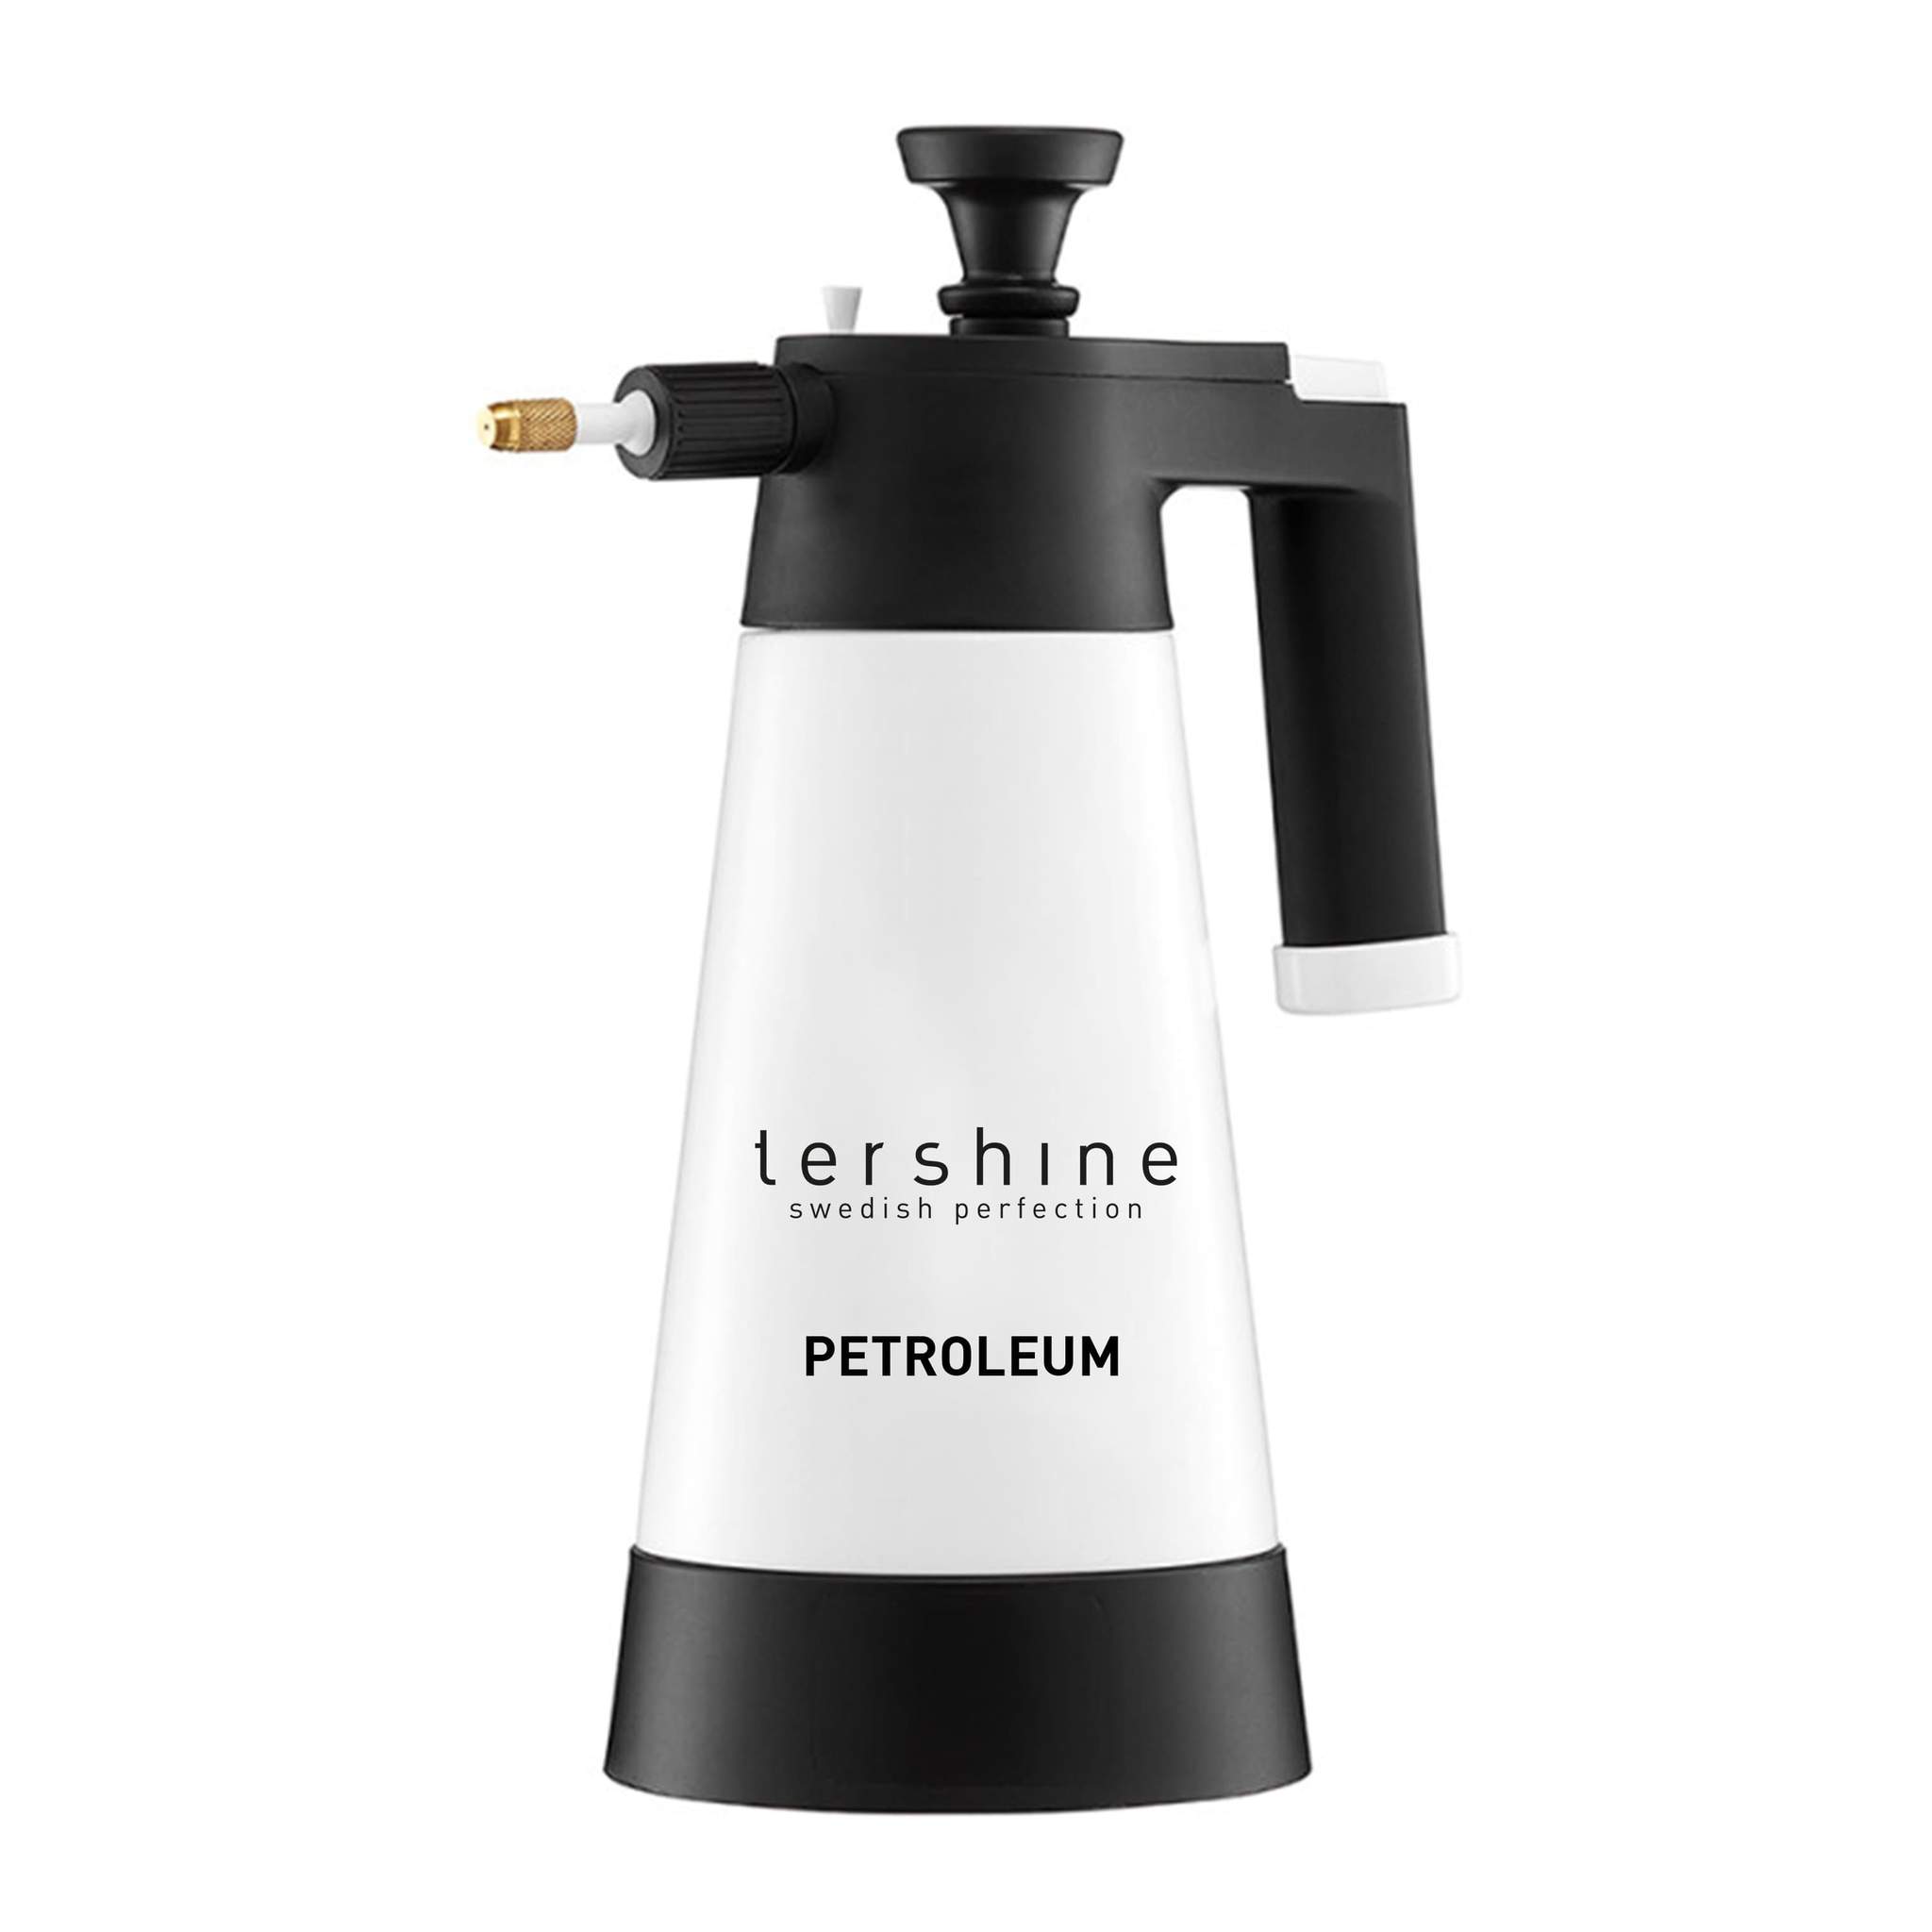 tershine - Spray Pump- Petroleum